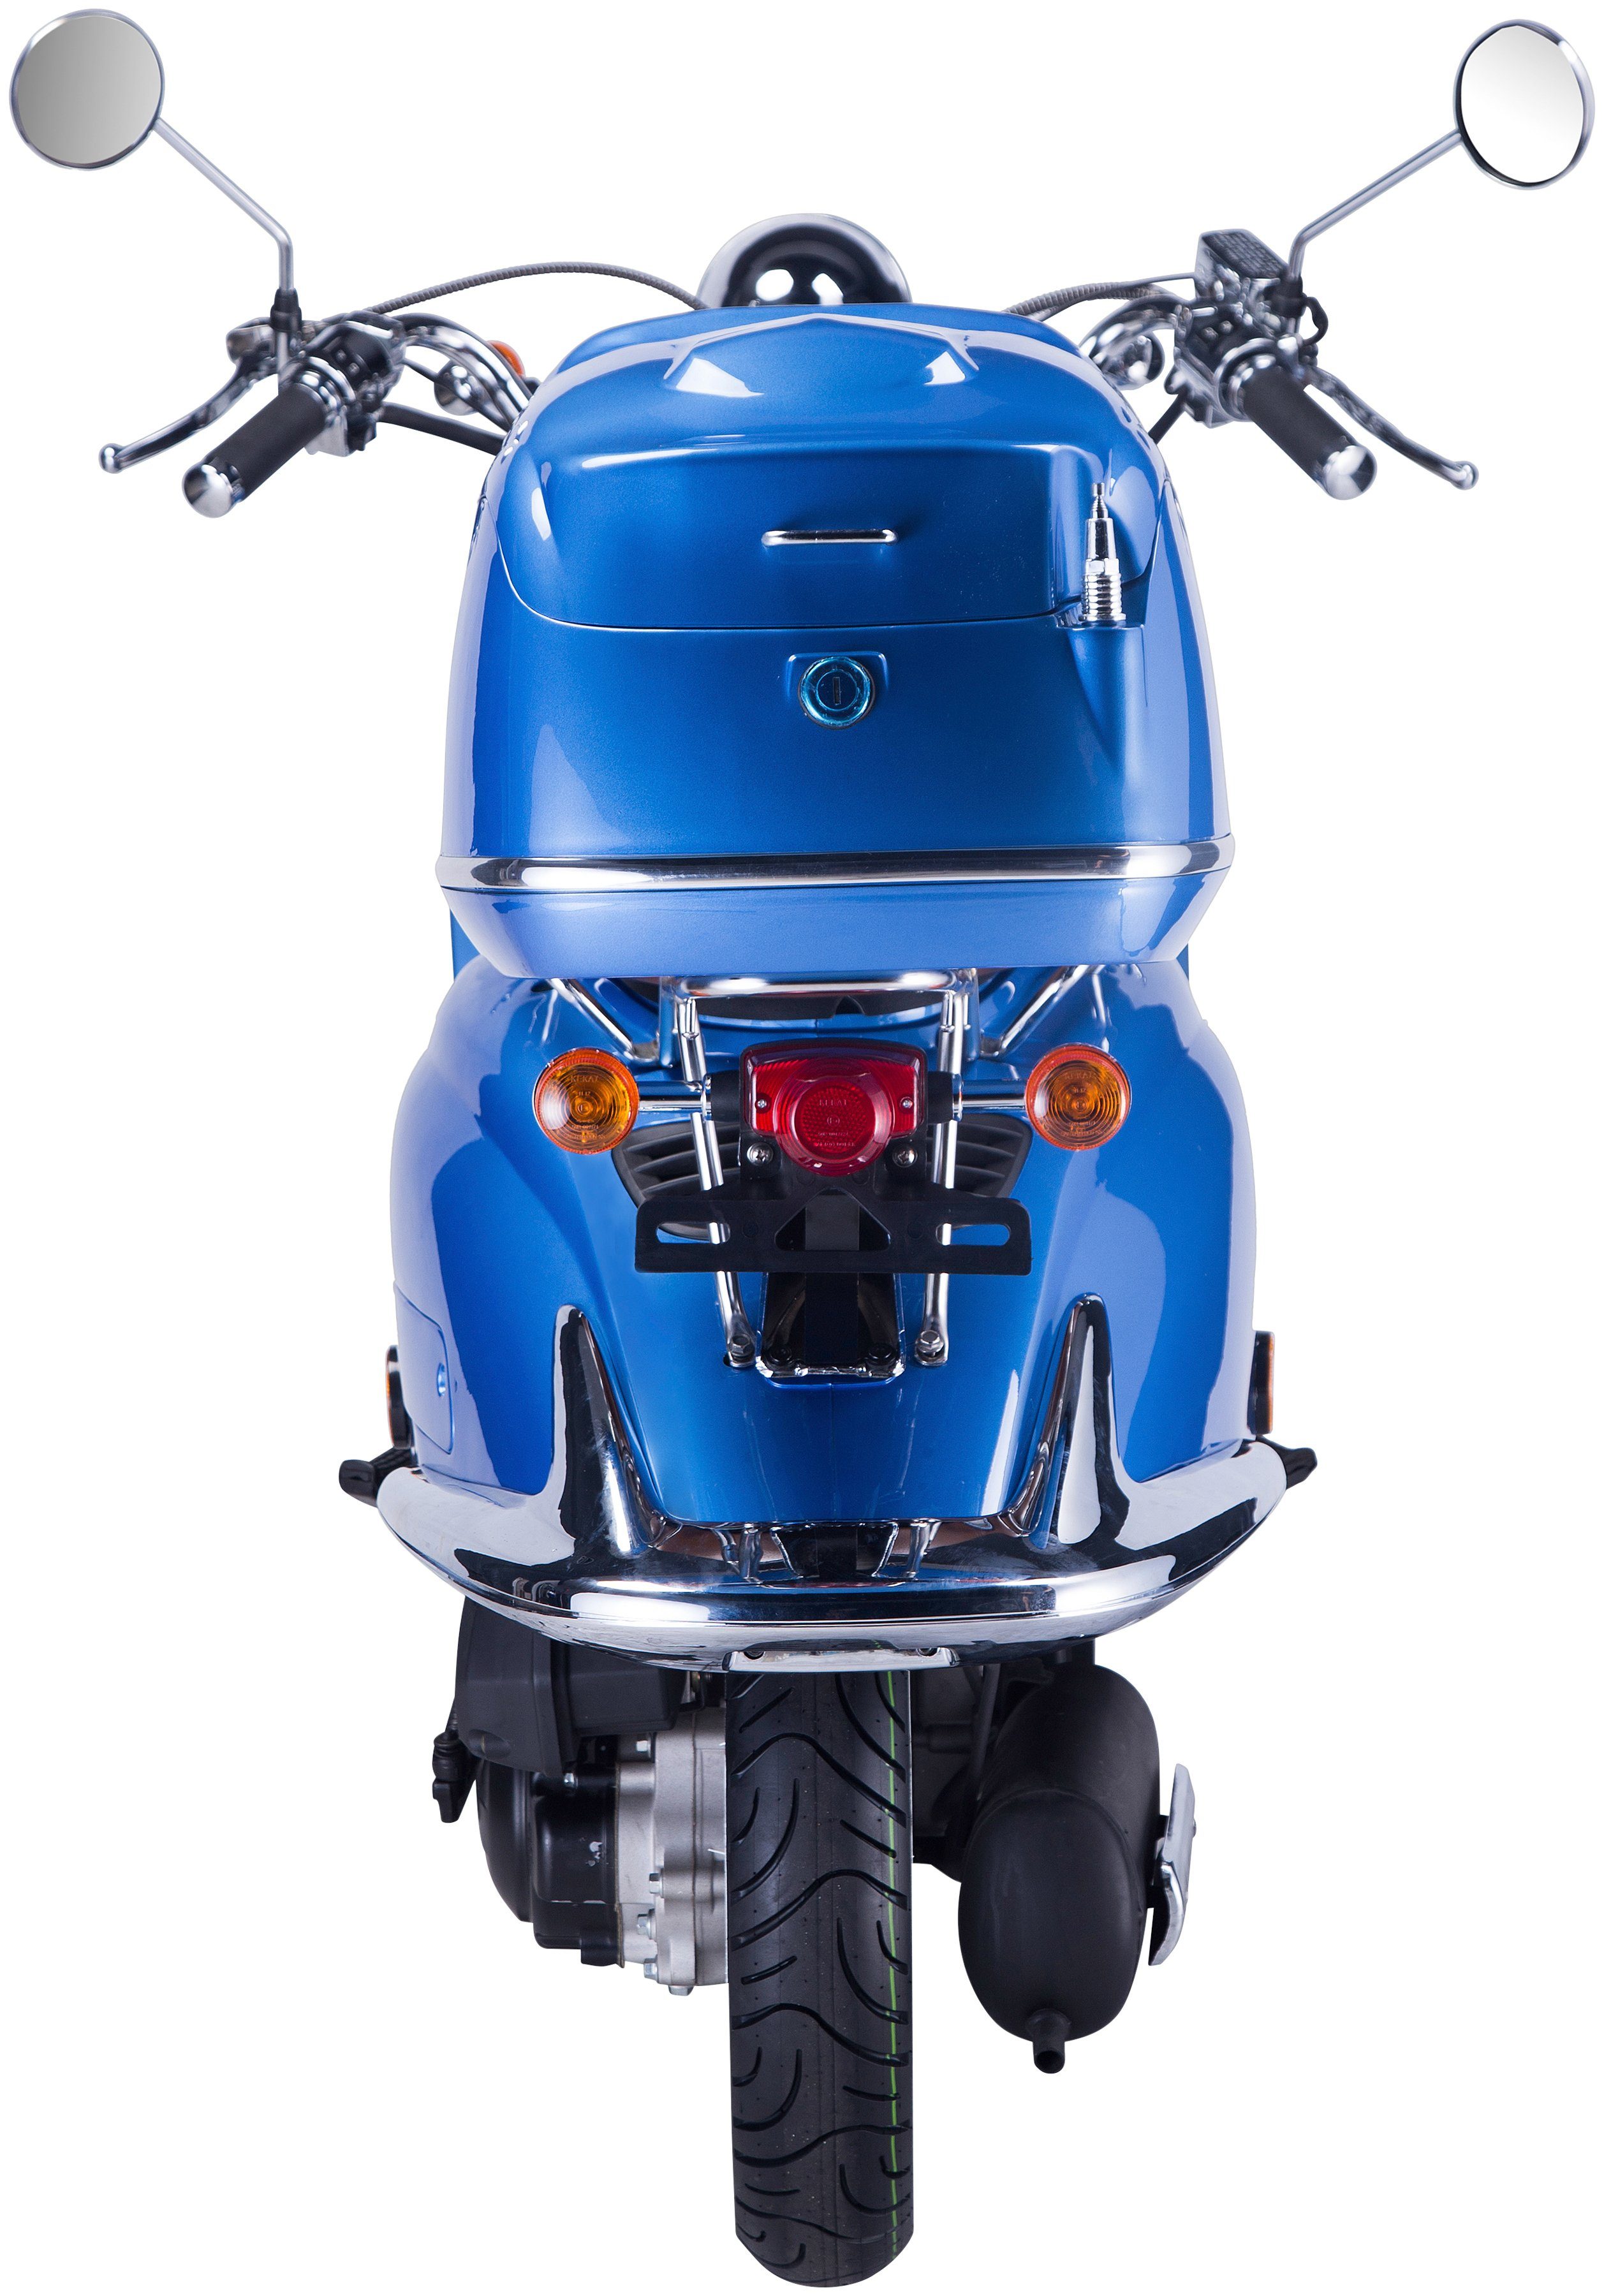 GT UNION Motorroller Strada, 125 km/h, 85 blau Topcase mit (Set), ccm, 5, Euro